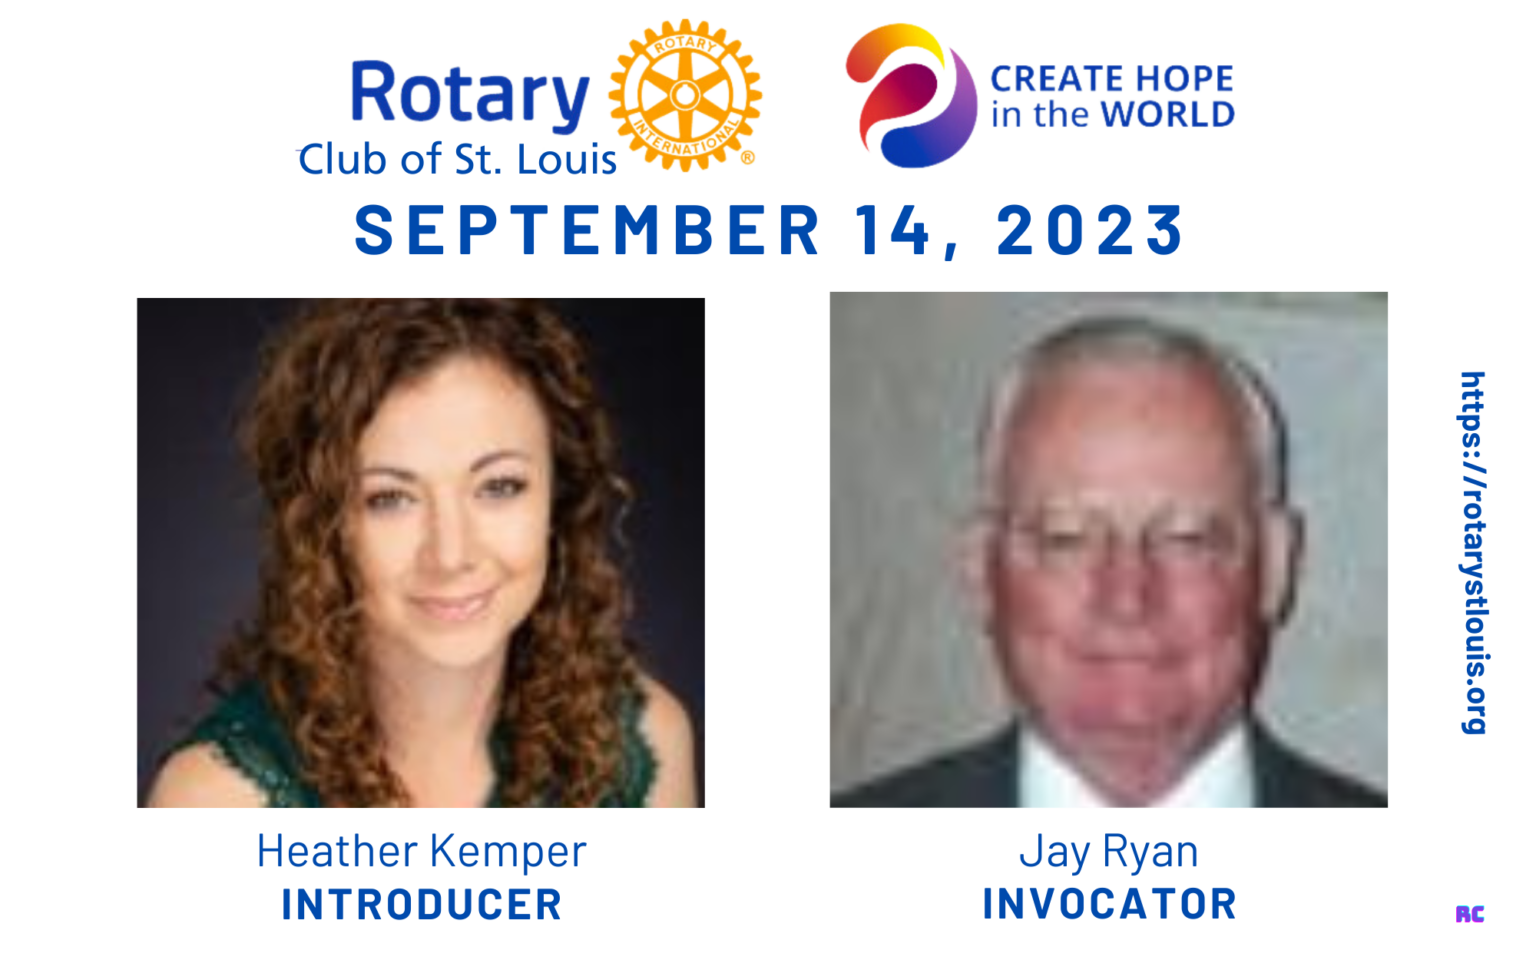 Heather Kemper, Introducer & Jay Ryan, Invocator at STL Rotary on 9-14-23